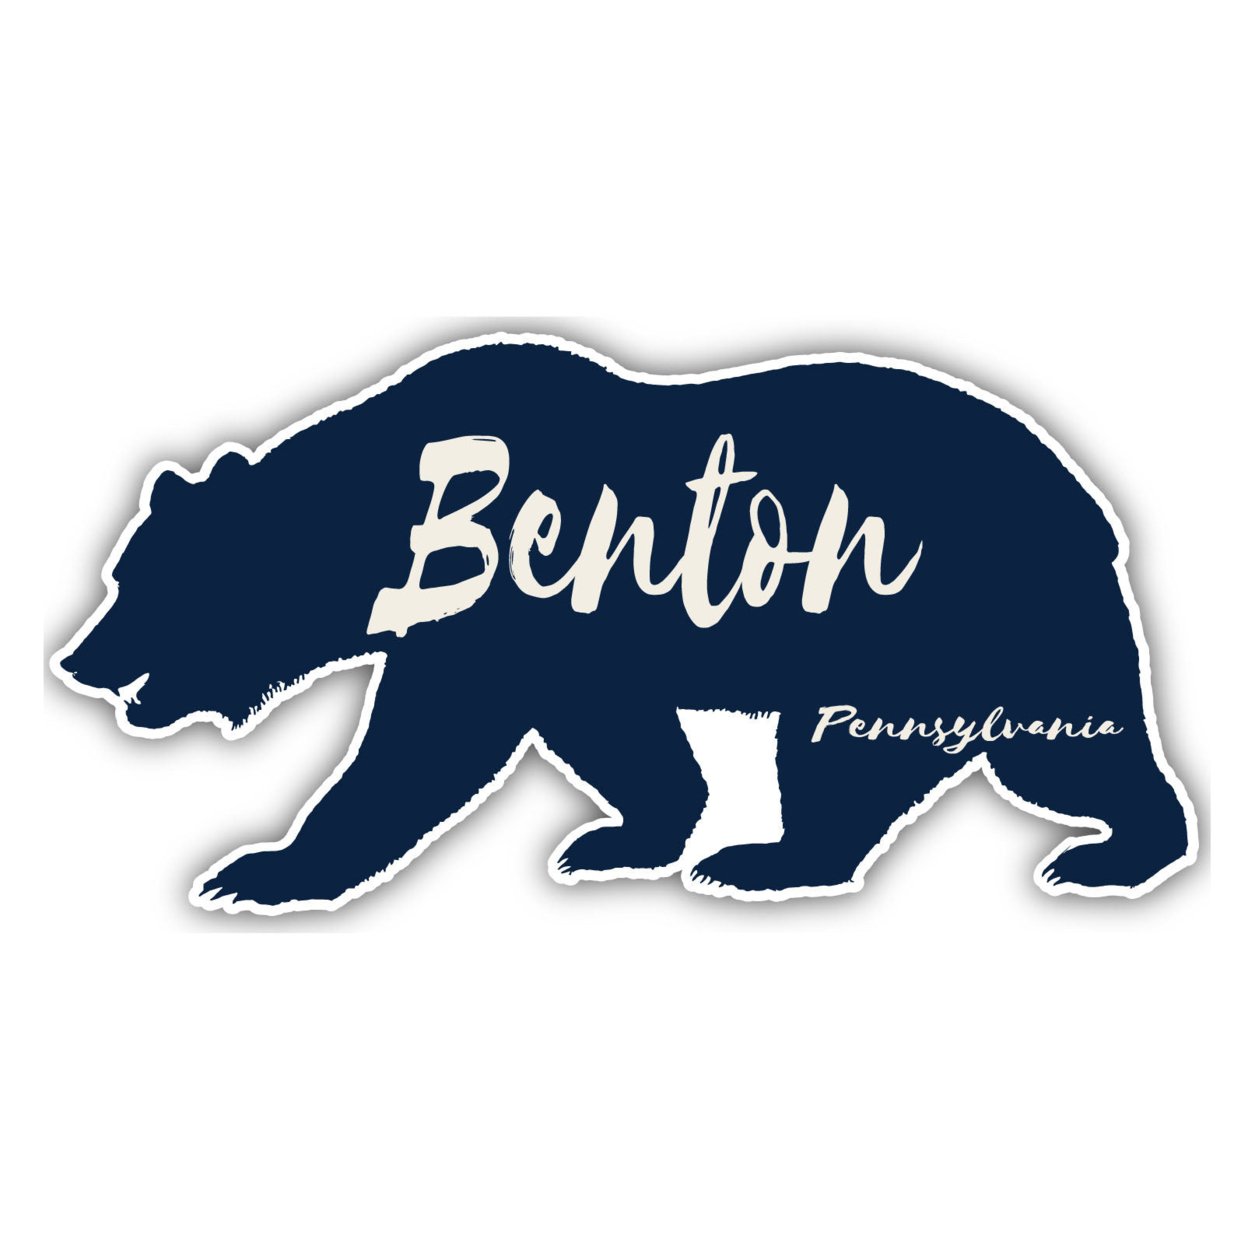 Benton Pennsylvania Souvenir Decorative Stickers (Choose Theme And Size) - 4-Pack, 4-Inch, Bear